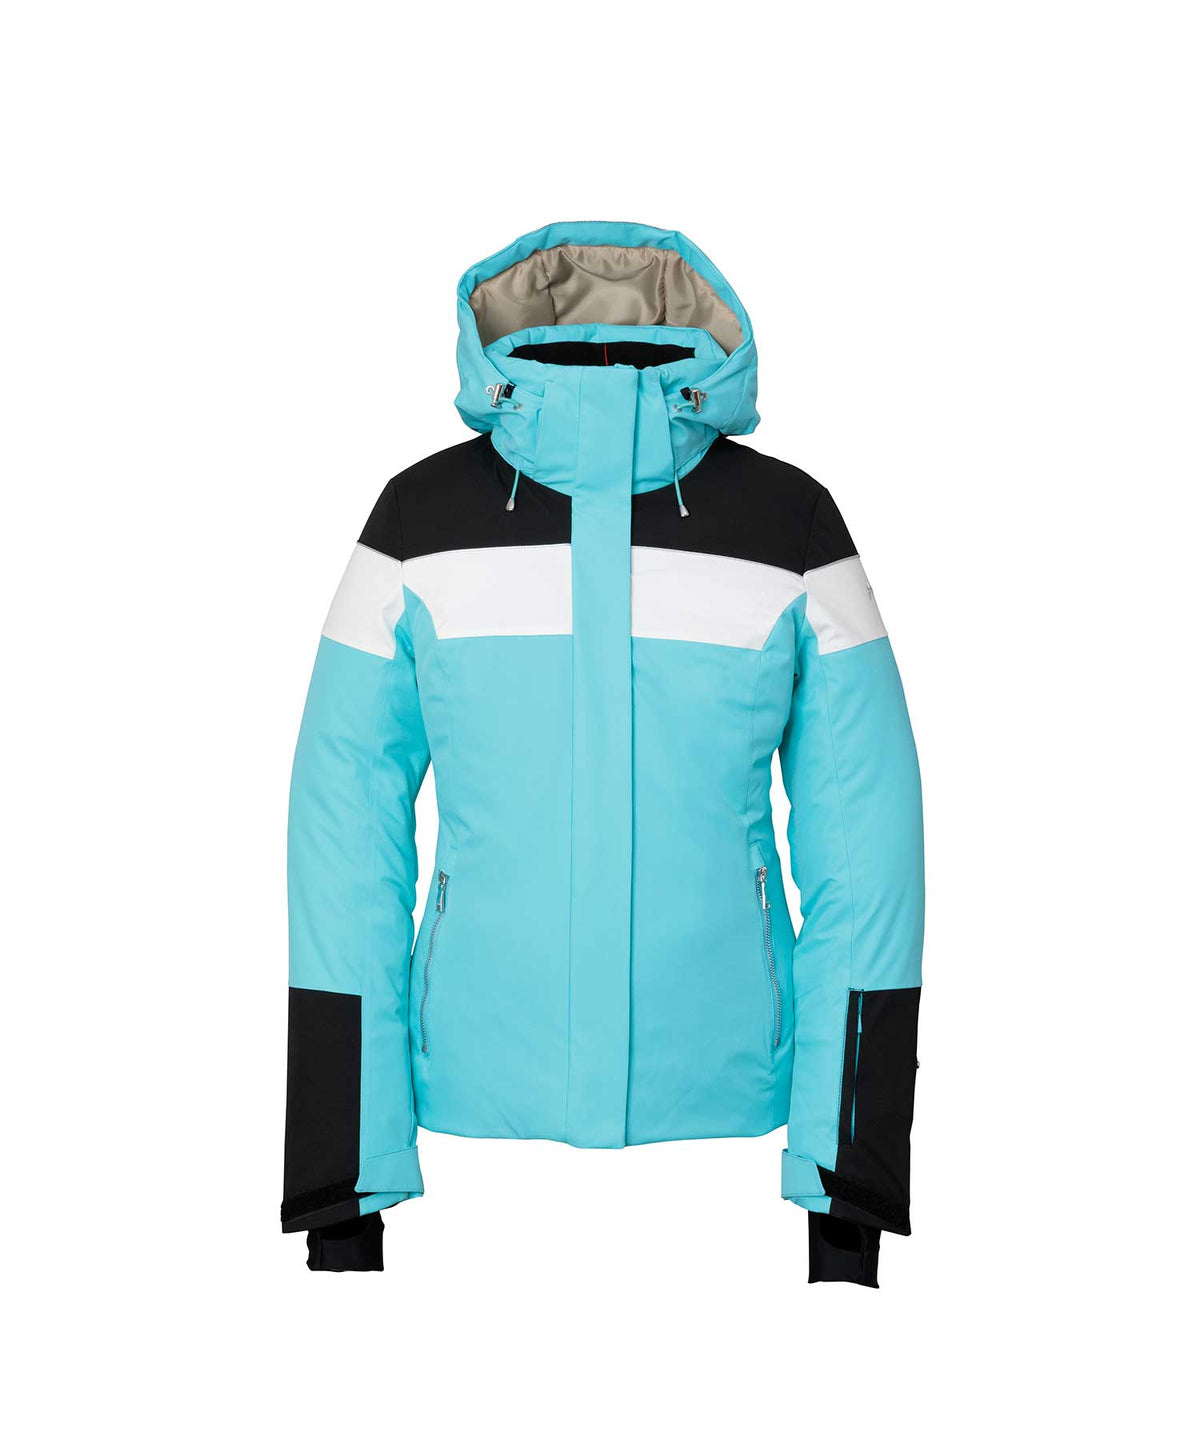 WOMENS】スキーウェア アウタージャケット トップス Axis Ws Jacket 